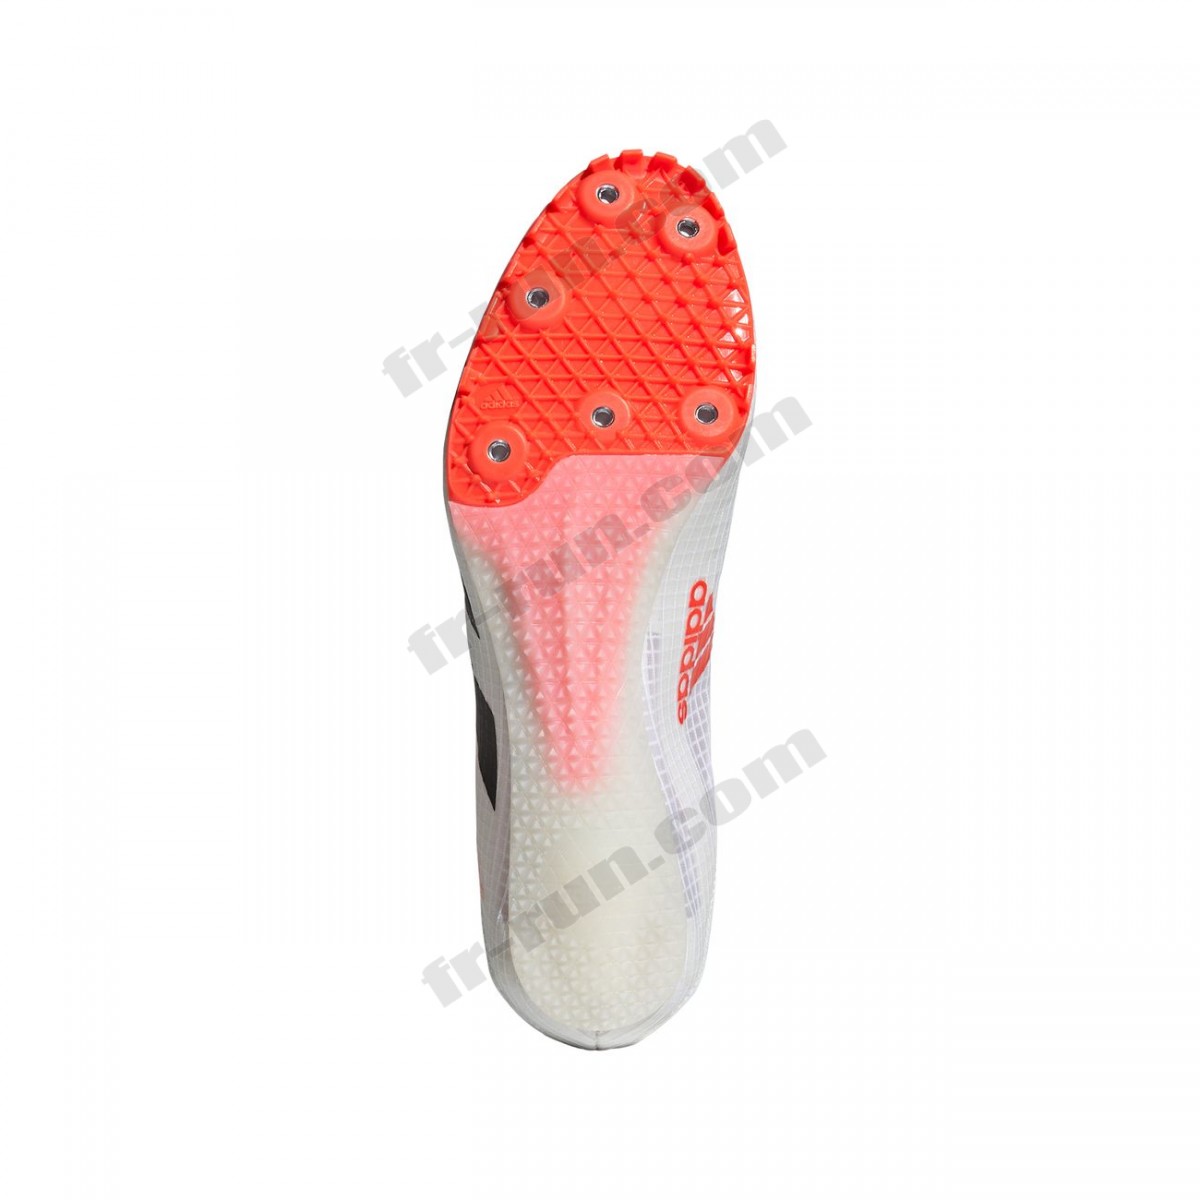 Adidas/Athlétisme homme ADIDAS Chaussures adidas Sprintstar Tokyo √ Nouveau style √ Soldes - -7